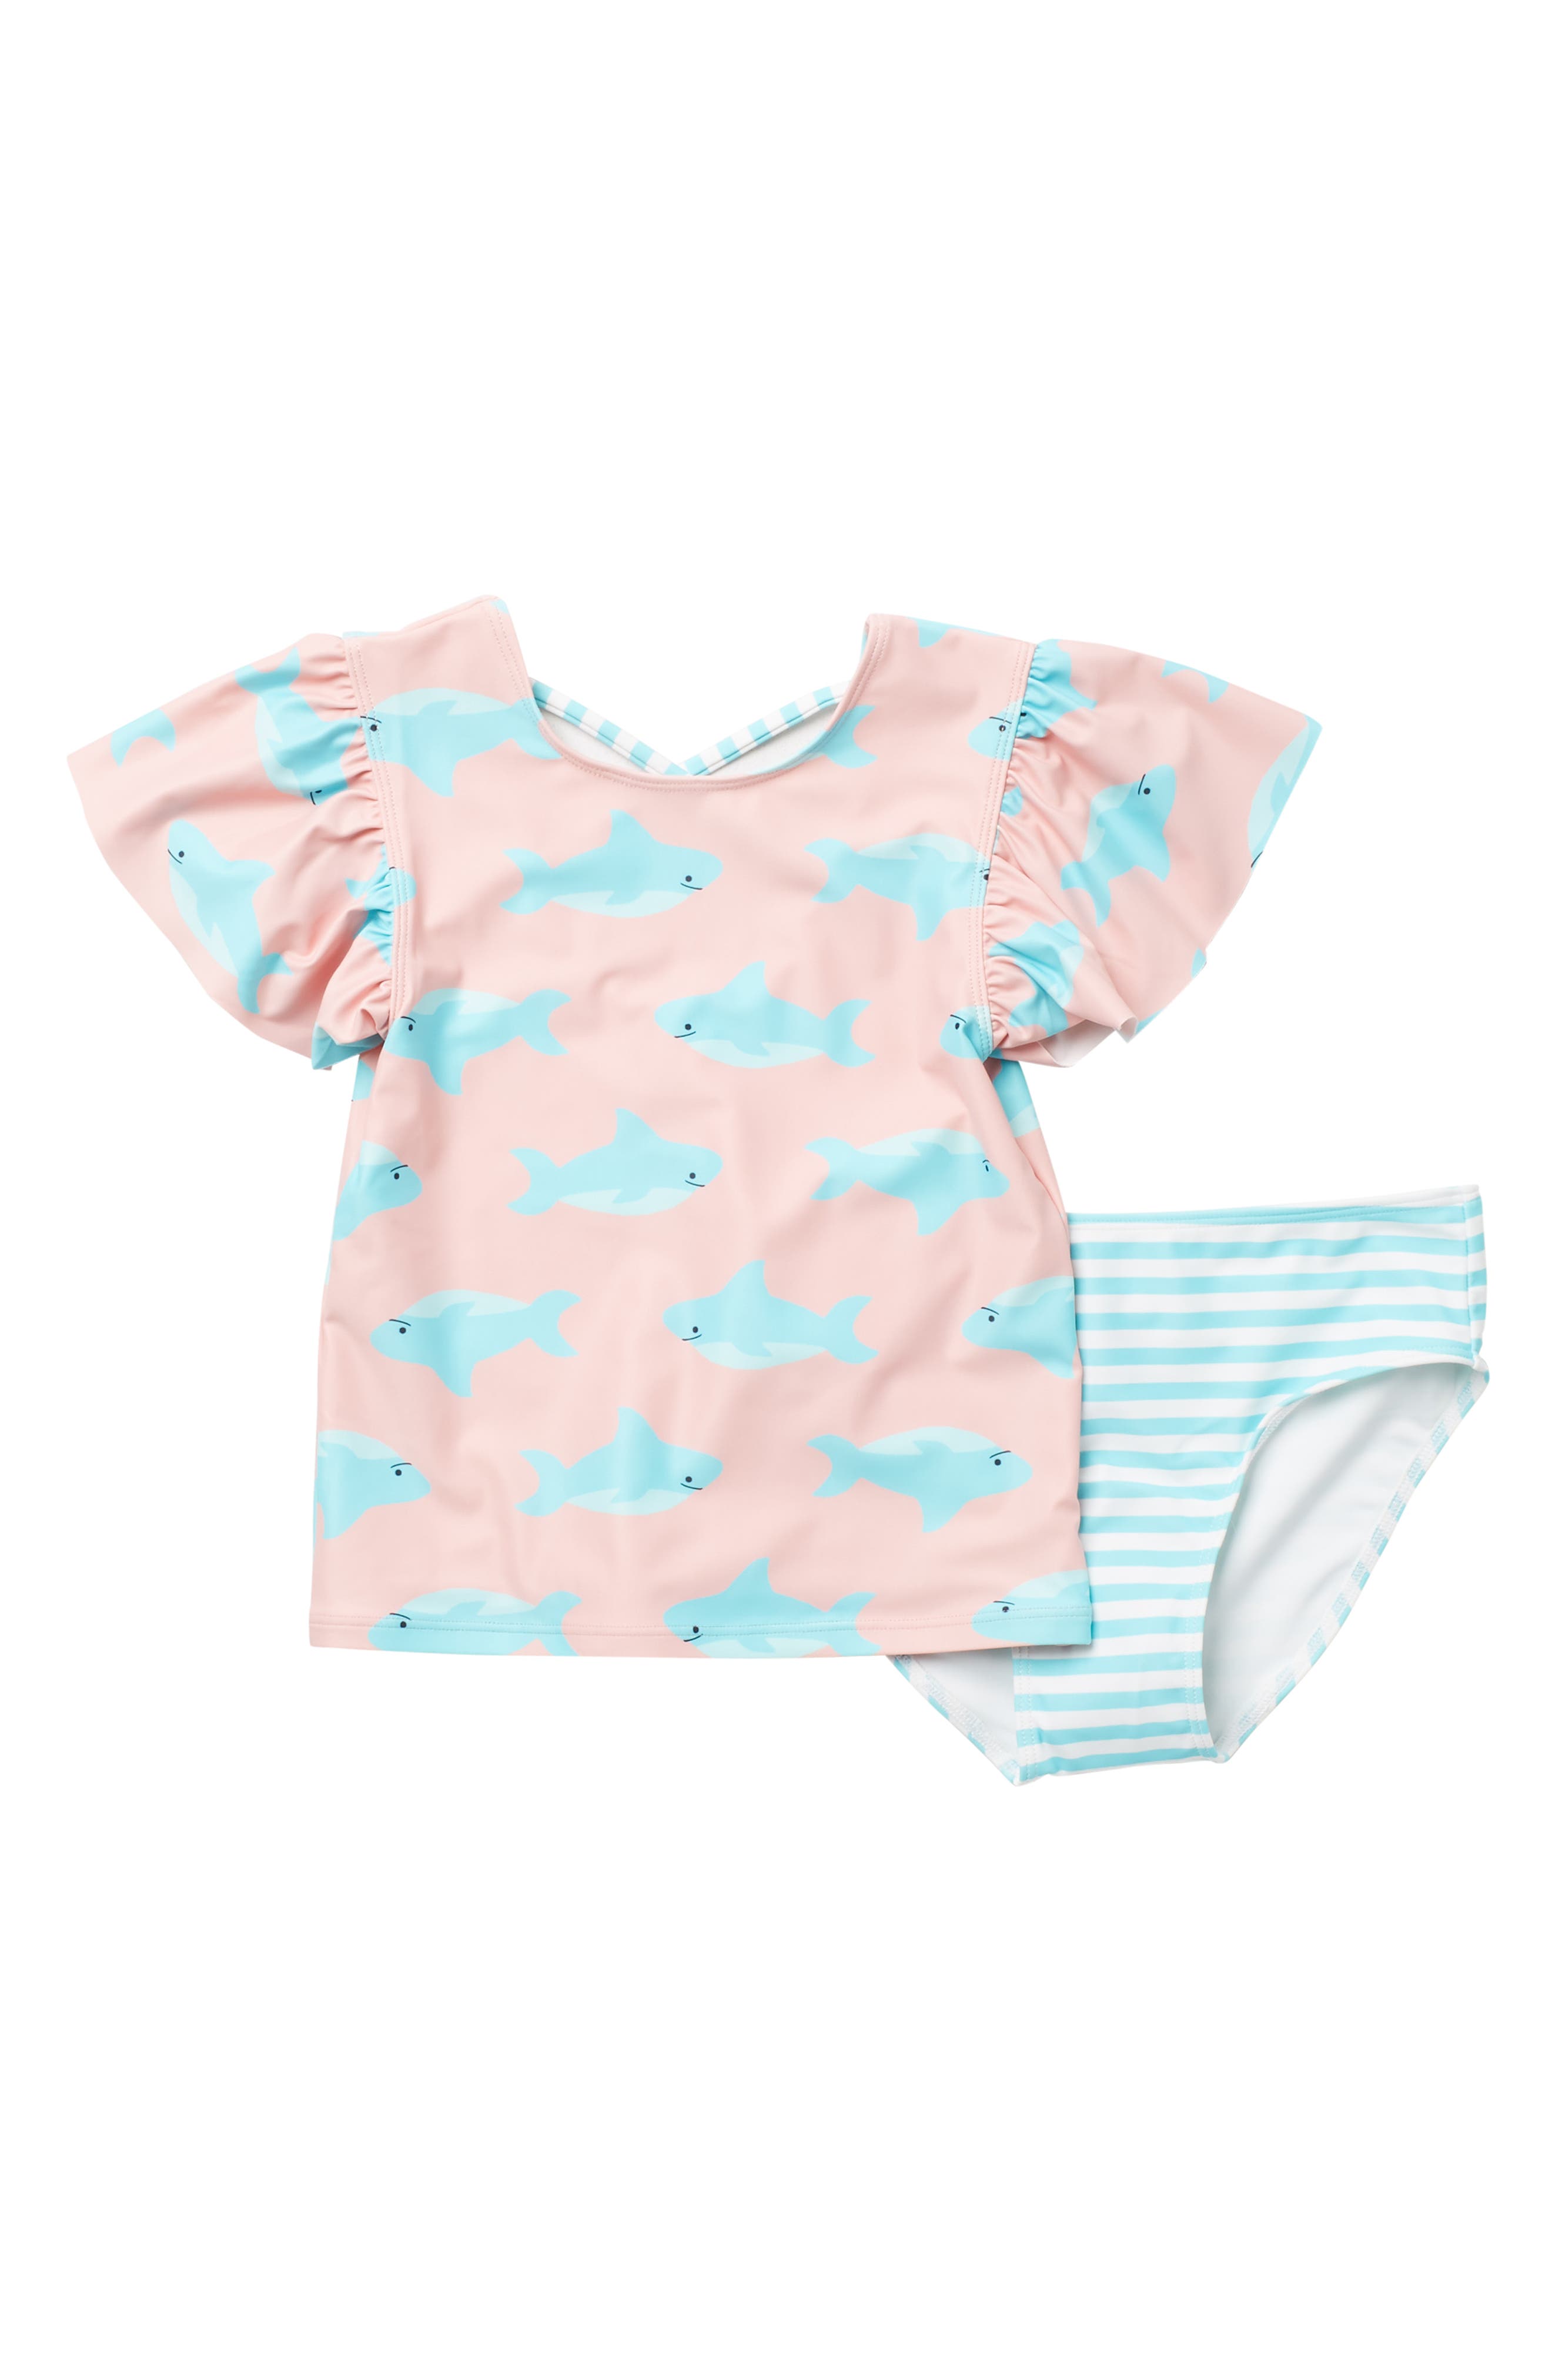 Harper Canyon Kids' Patterned 2-piece Rashguard Swimsuit In Pink Sharks- Teal Stripe